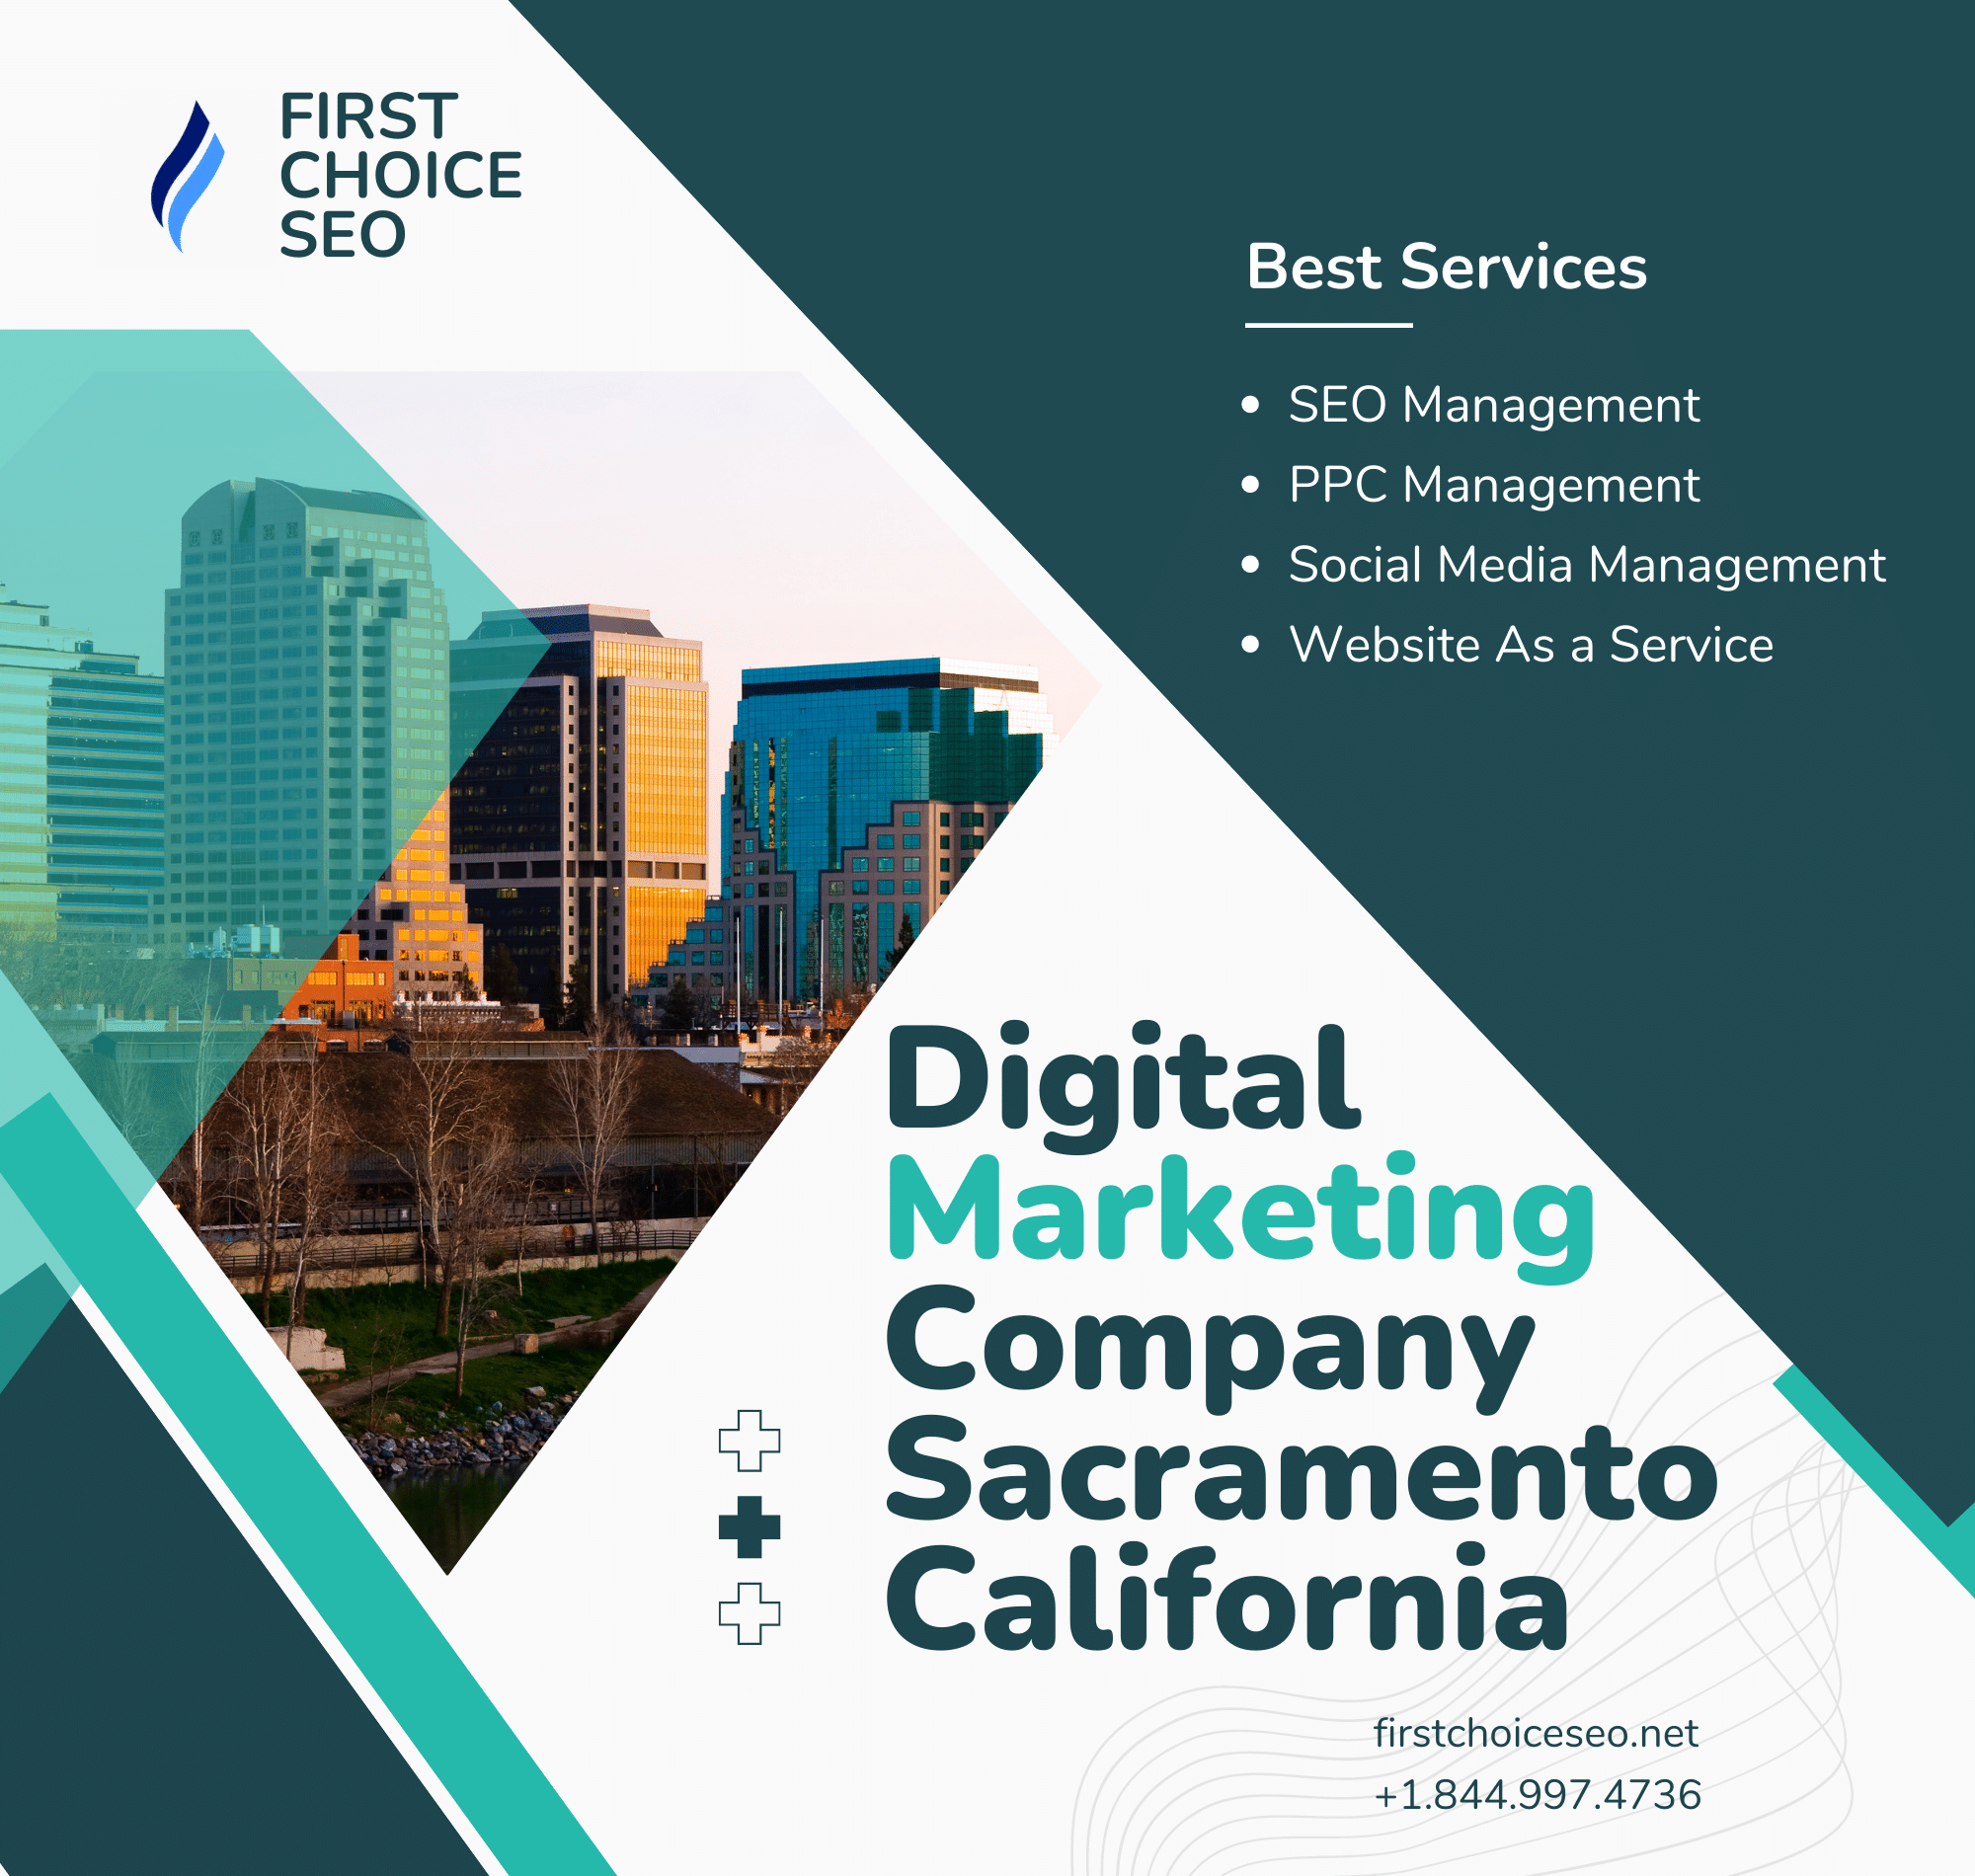 Digital Marketing Services Company in Sacramento California